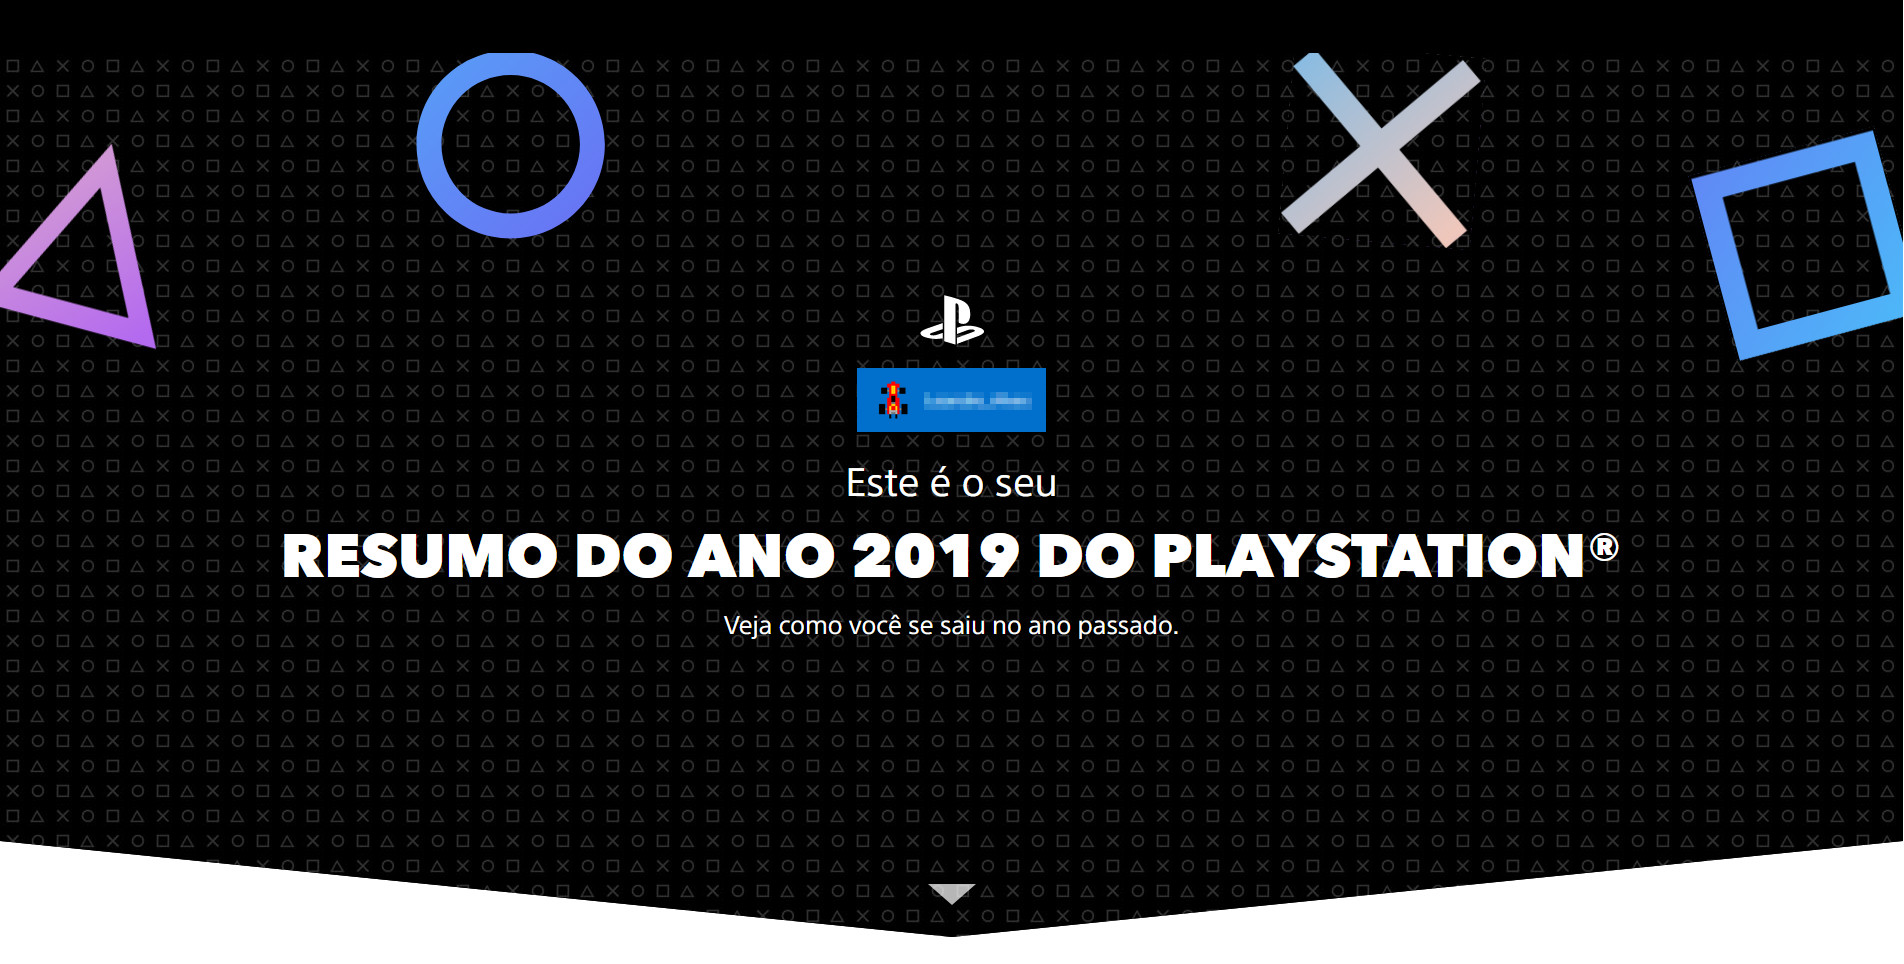 PlayStation em 2019